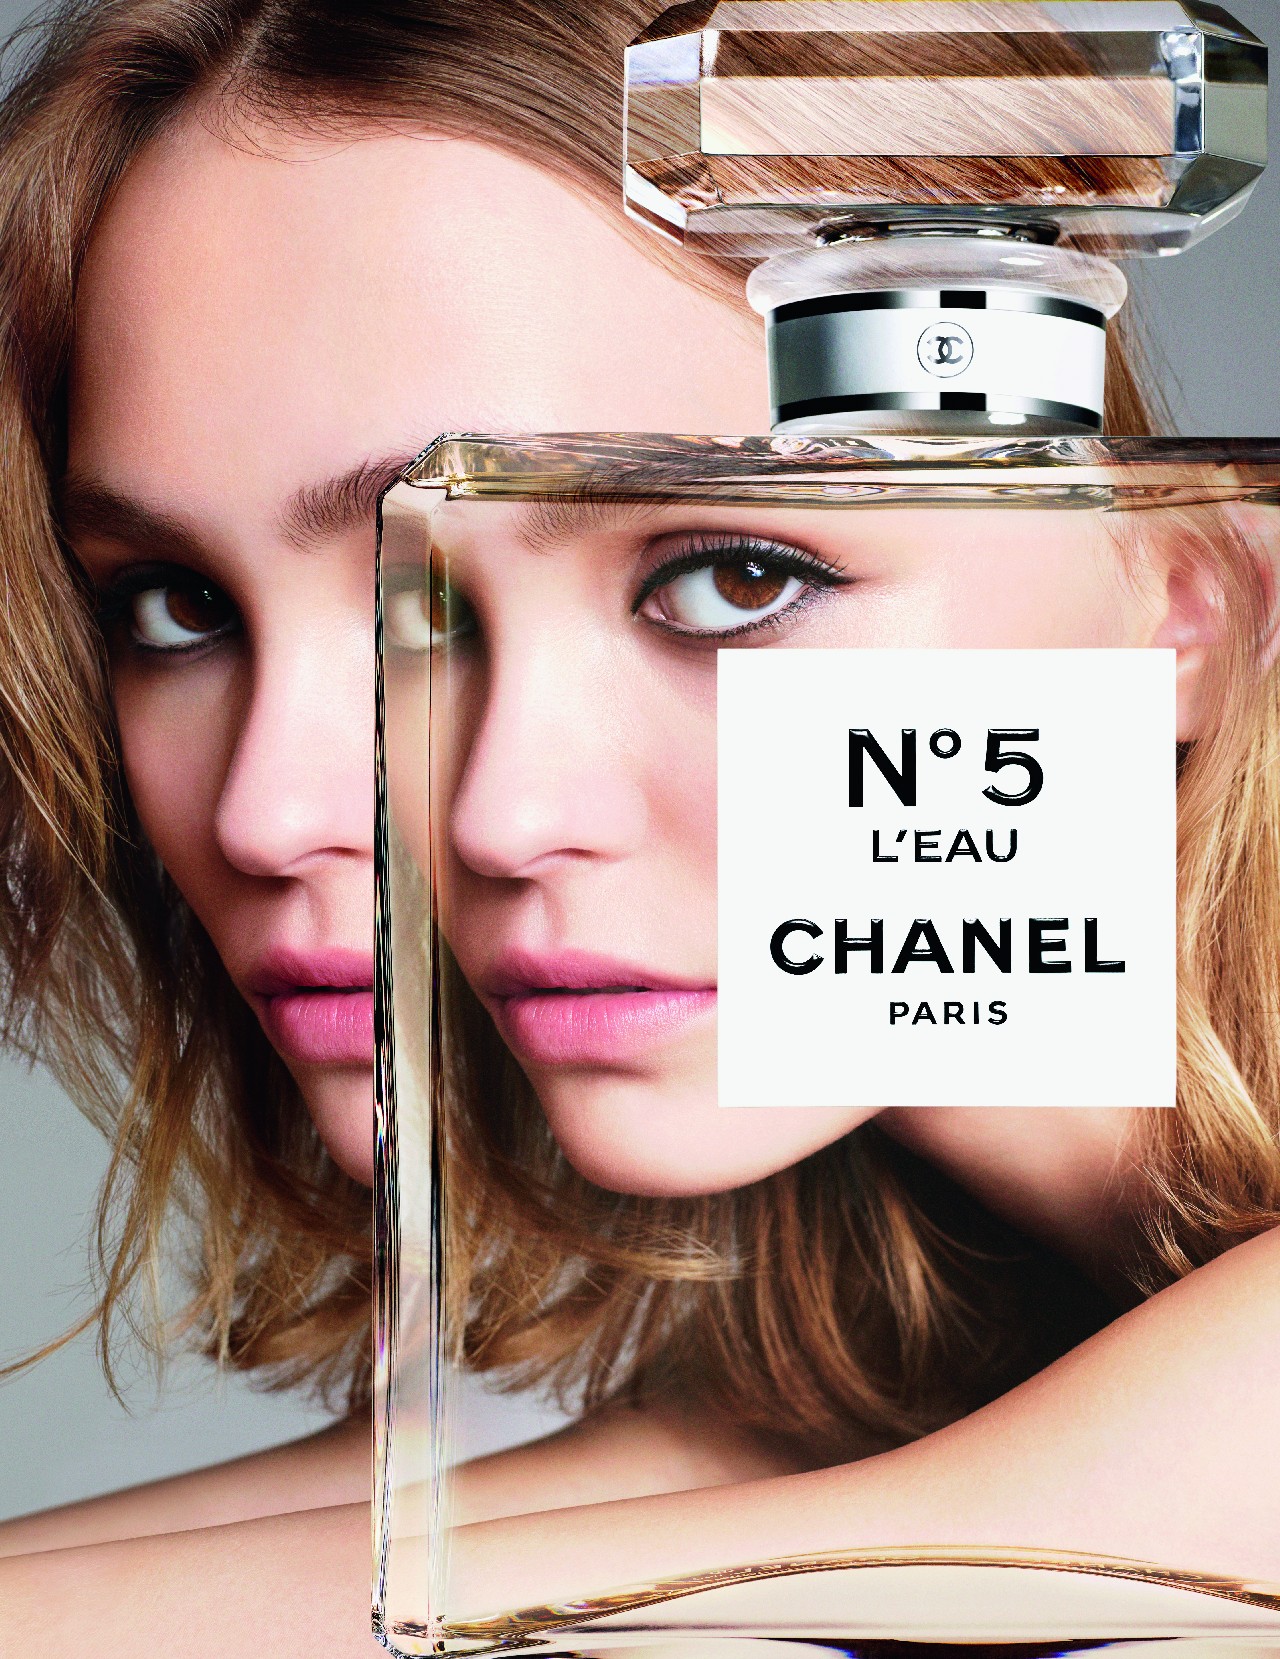 Chanel N 5 L’EAU: svelati i teaser della campagna pubblicitaria, testimonial Lily-Rose Depp